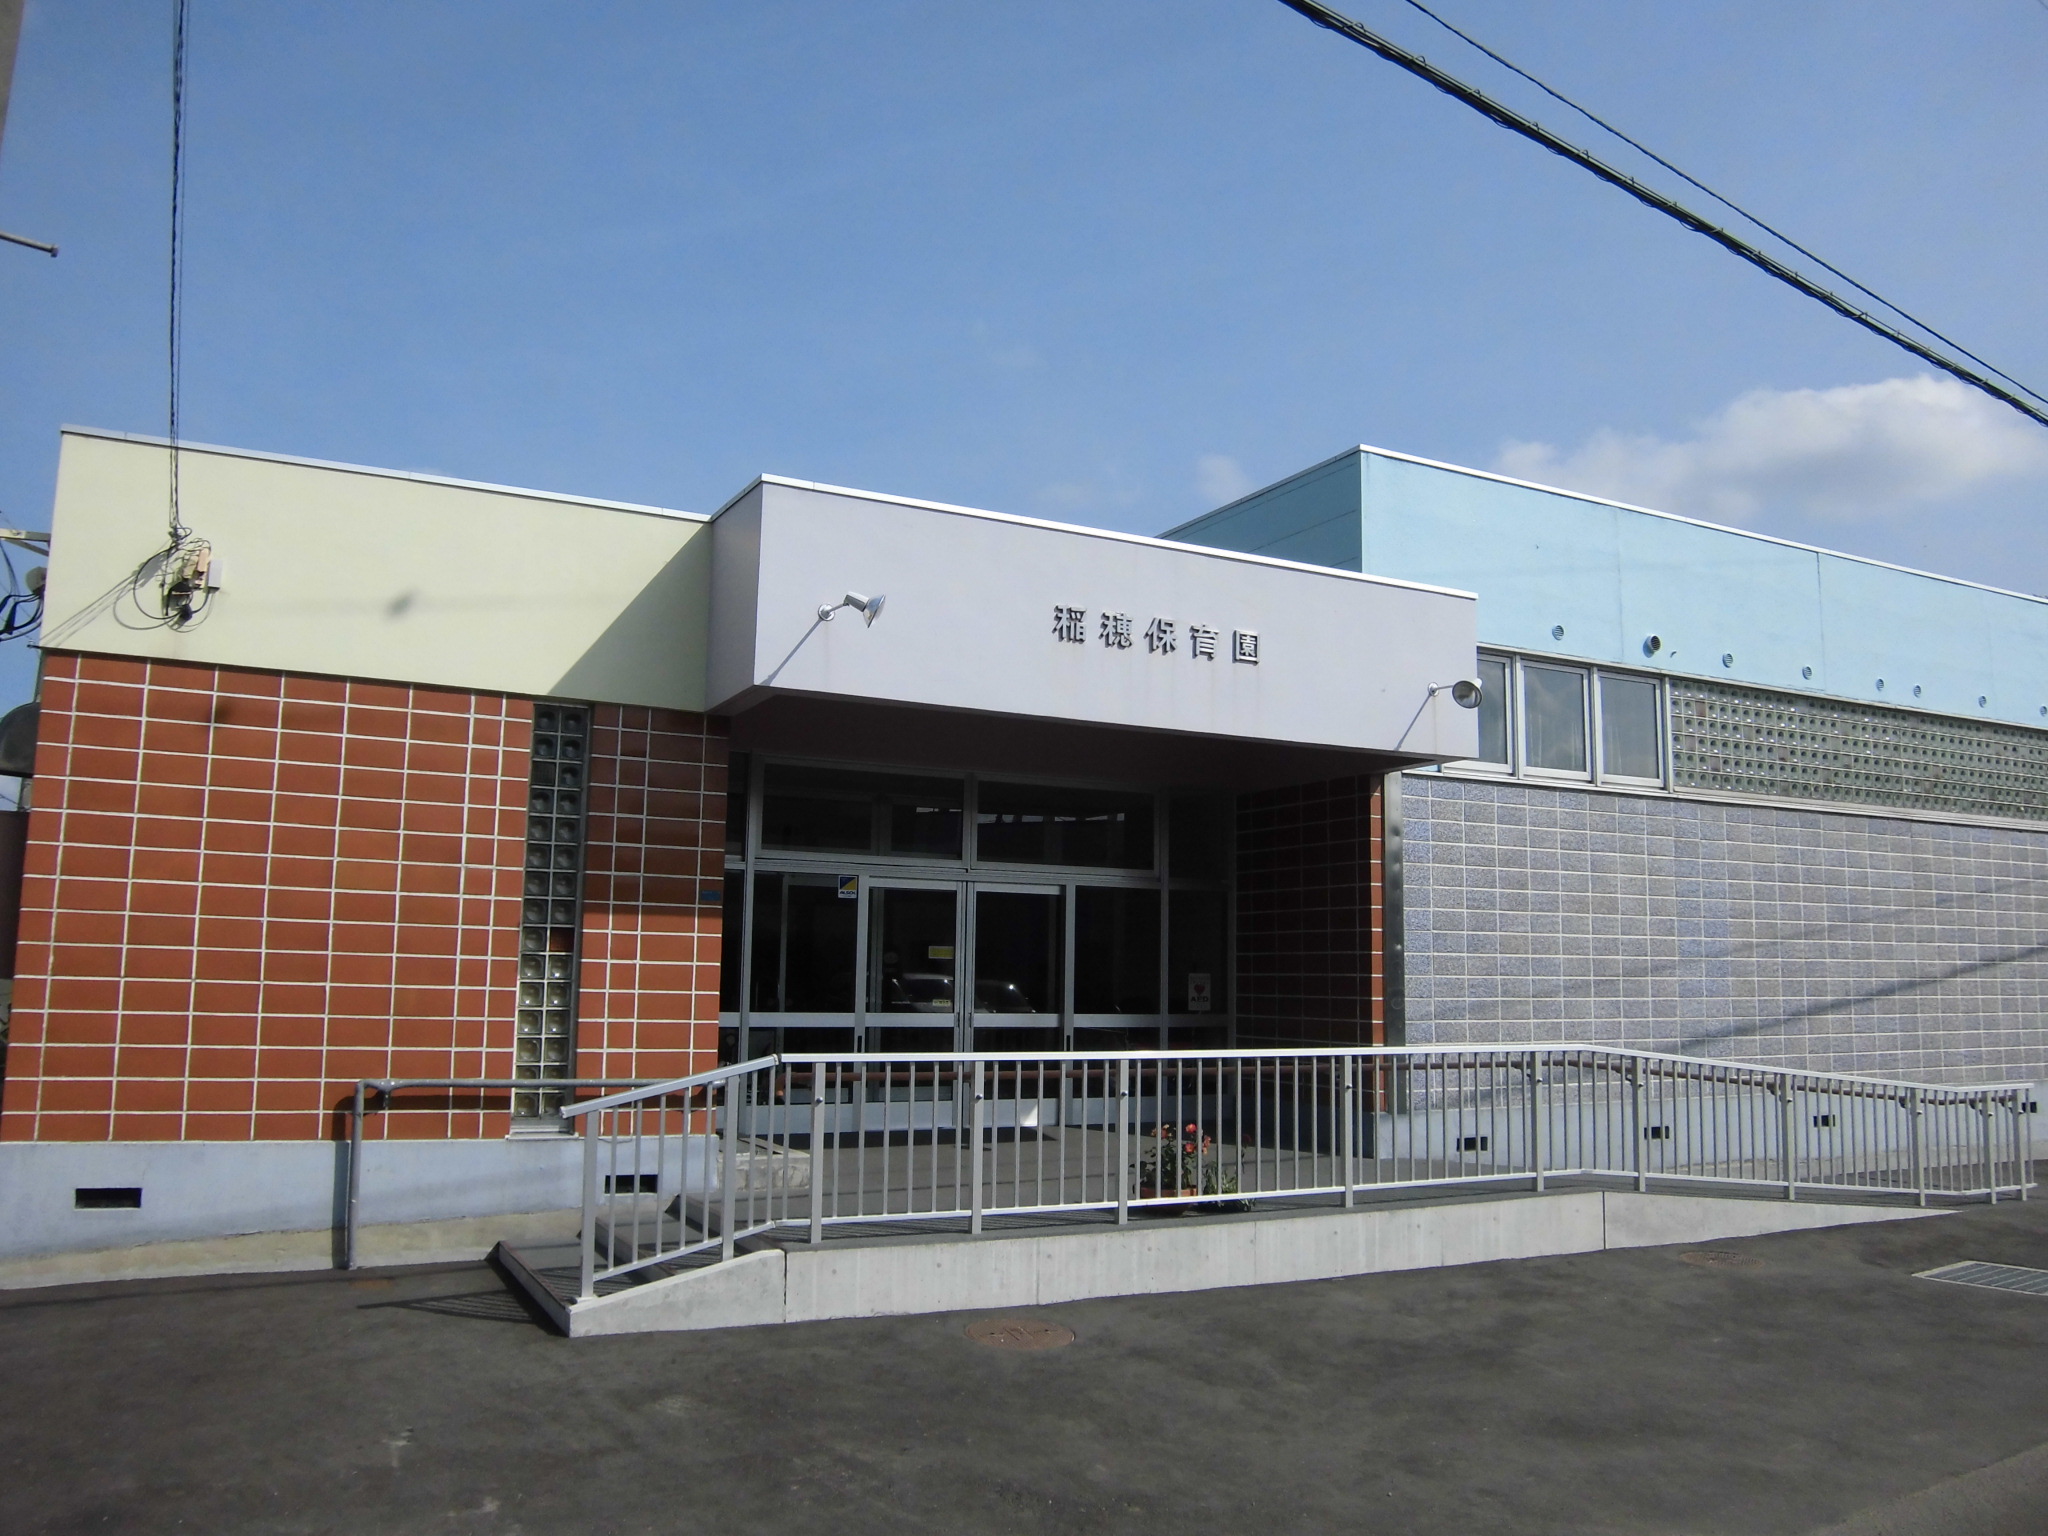 kindergarten ・ Nursery. Rice nursery school (kindergarten ・ 227m to the nursery)